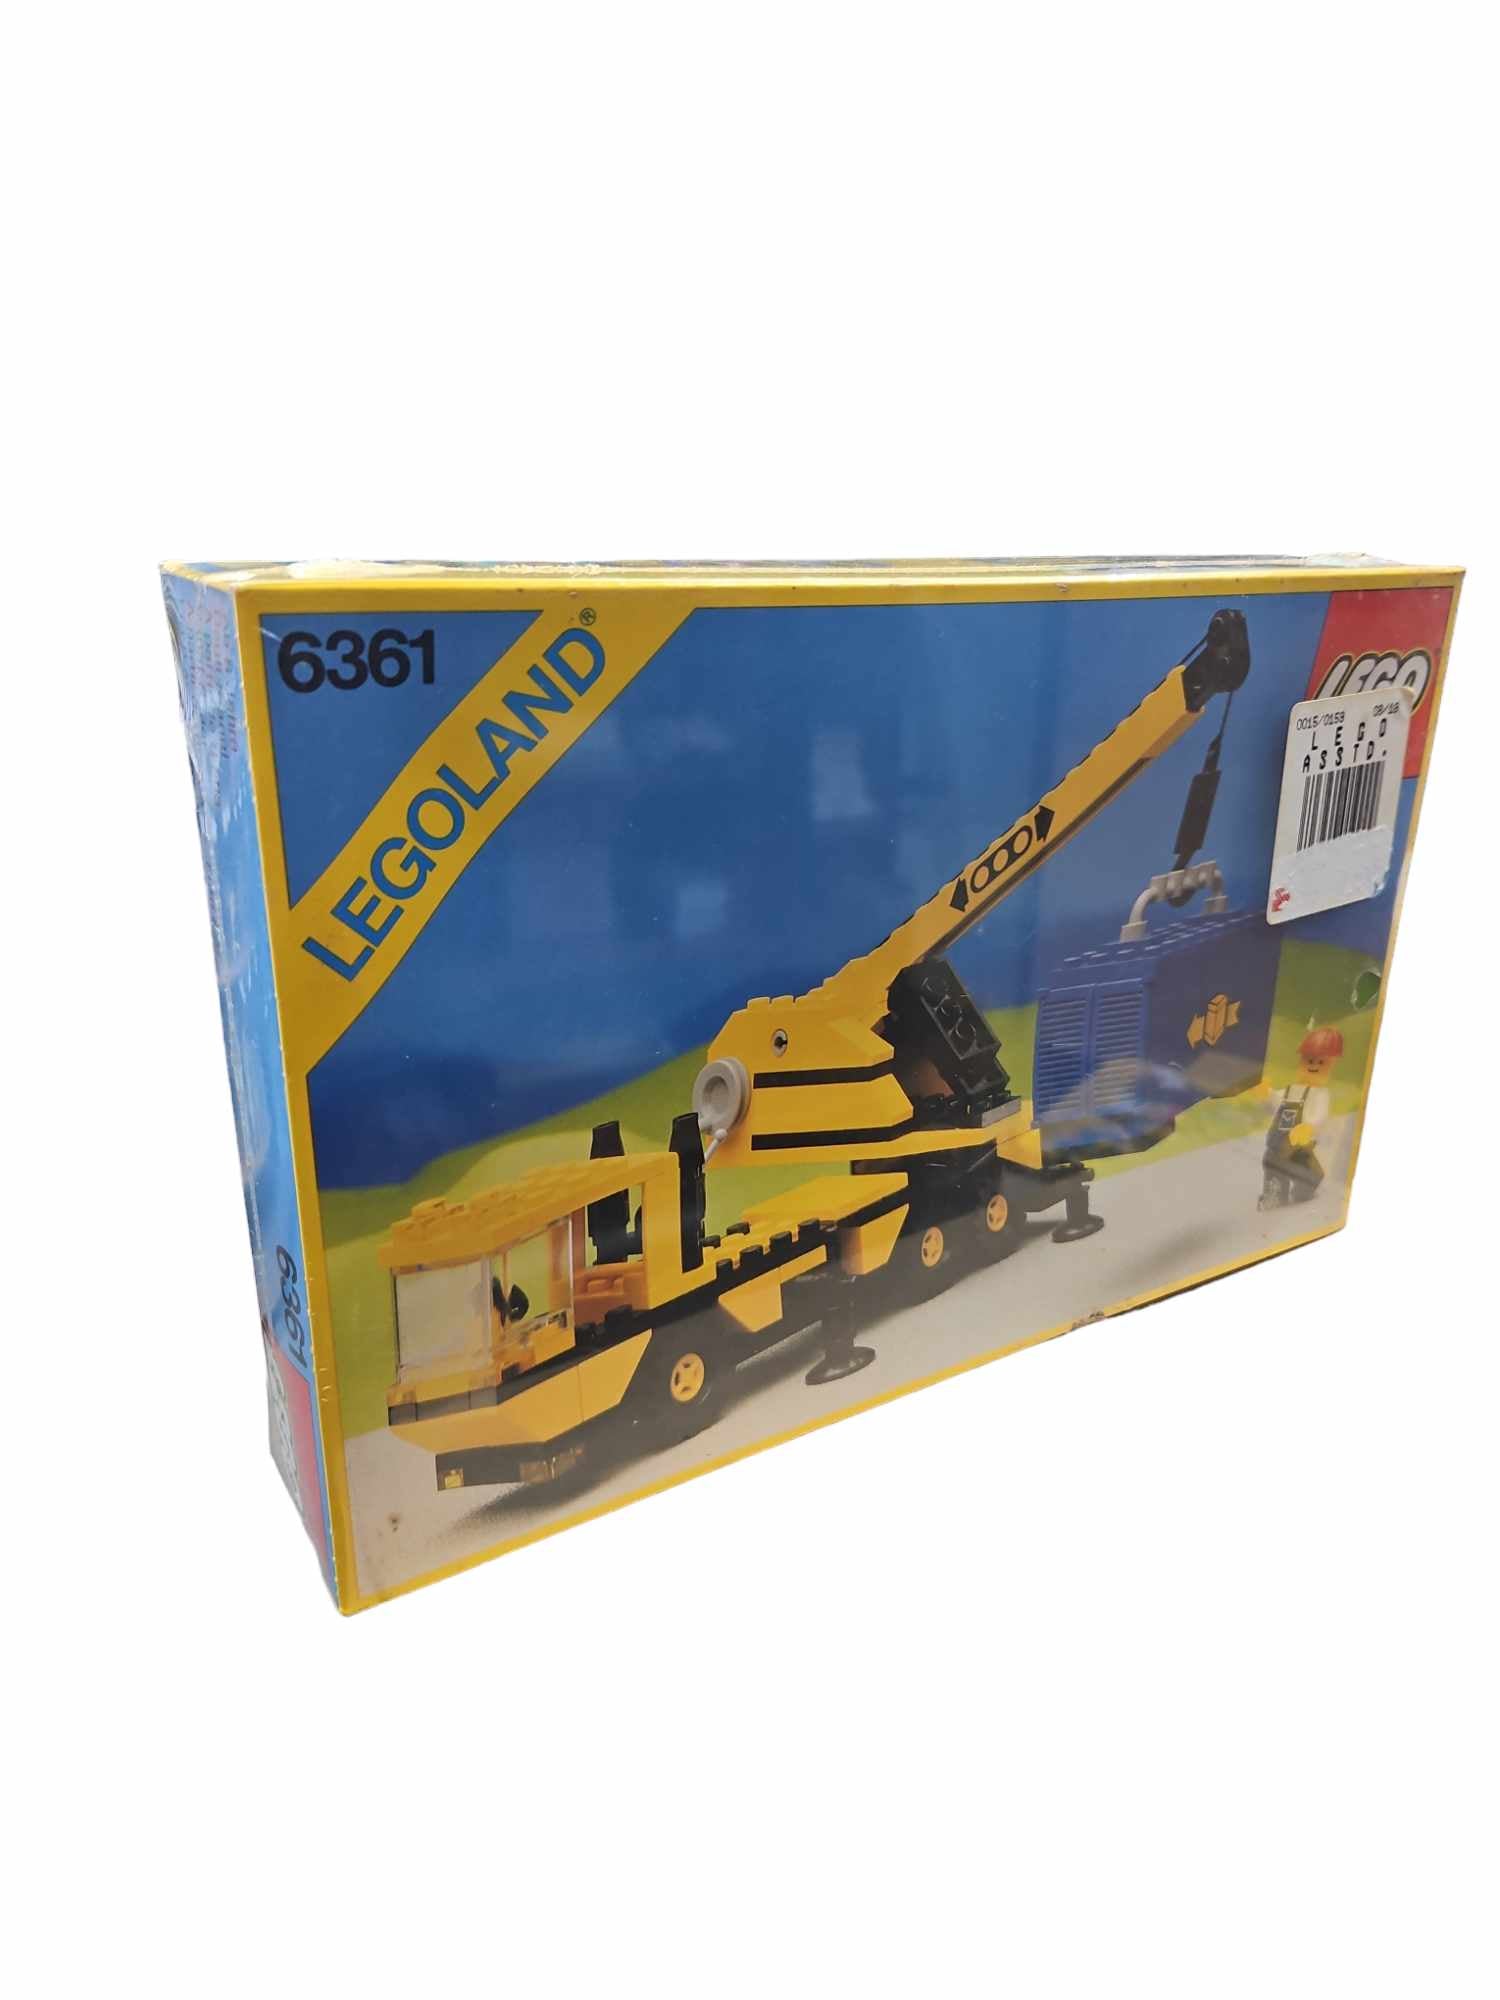 LEGO Mobile Crane 6361